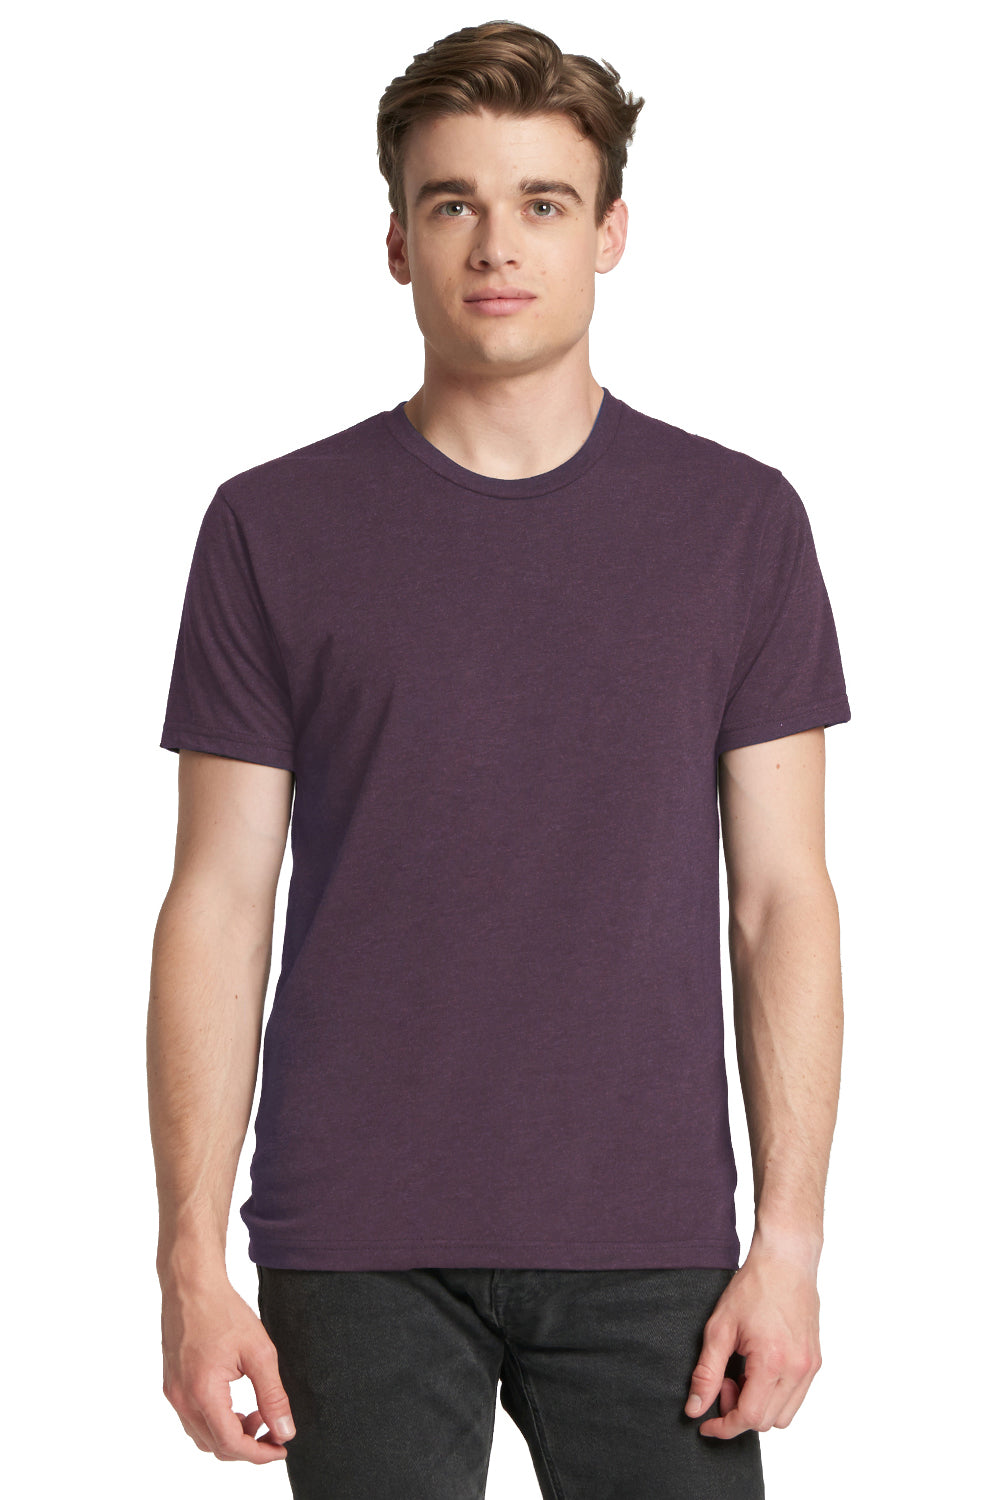 Next Level 6010 Mens Jersey Short Sleeve Crewneck T-Shirt Purple Front